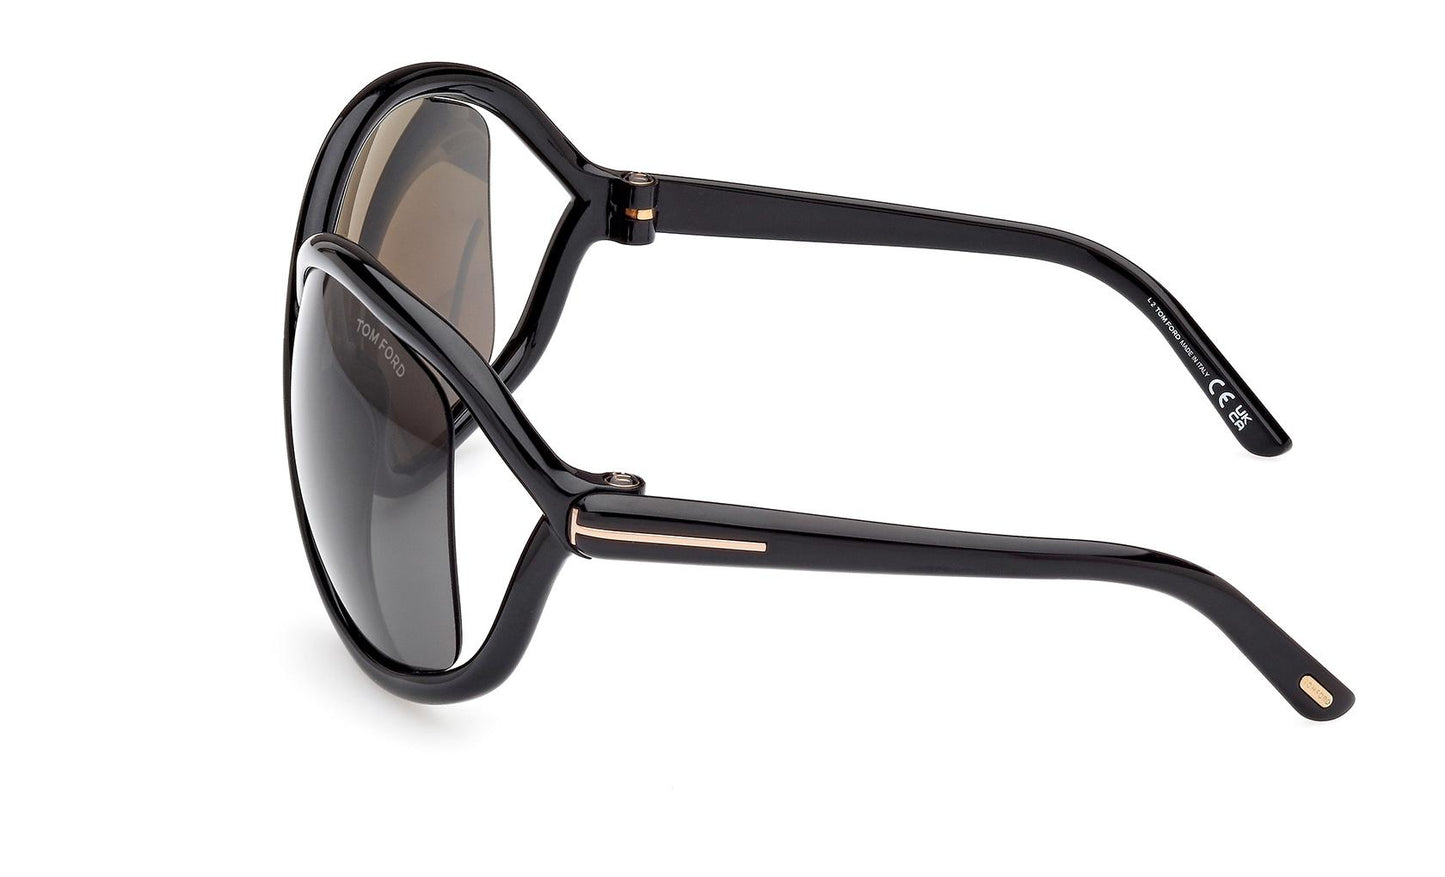 Tom Ford Bettina Sunglasses FT1068 01A